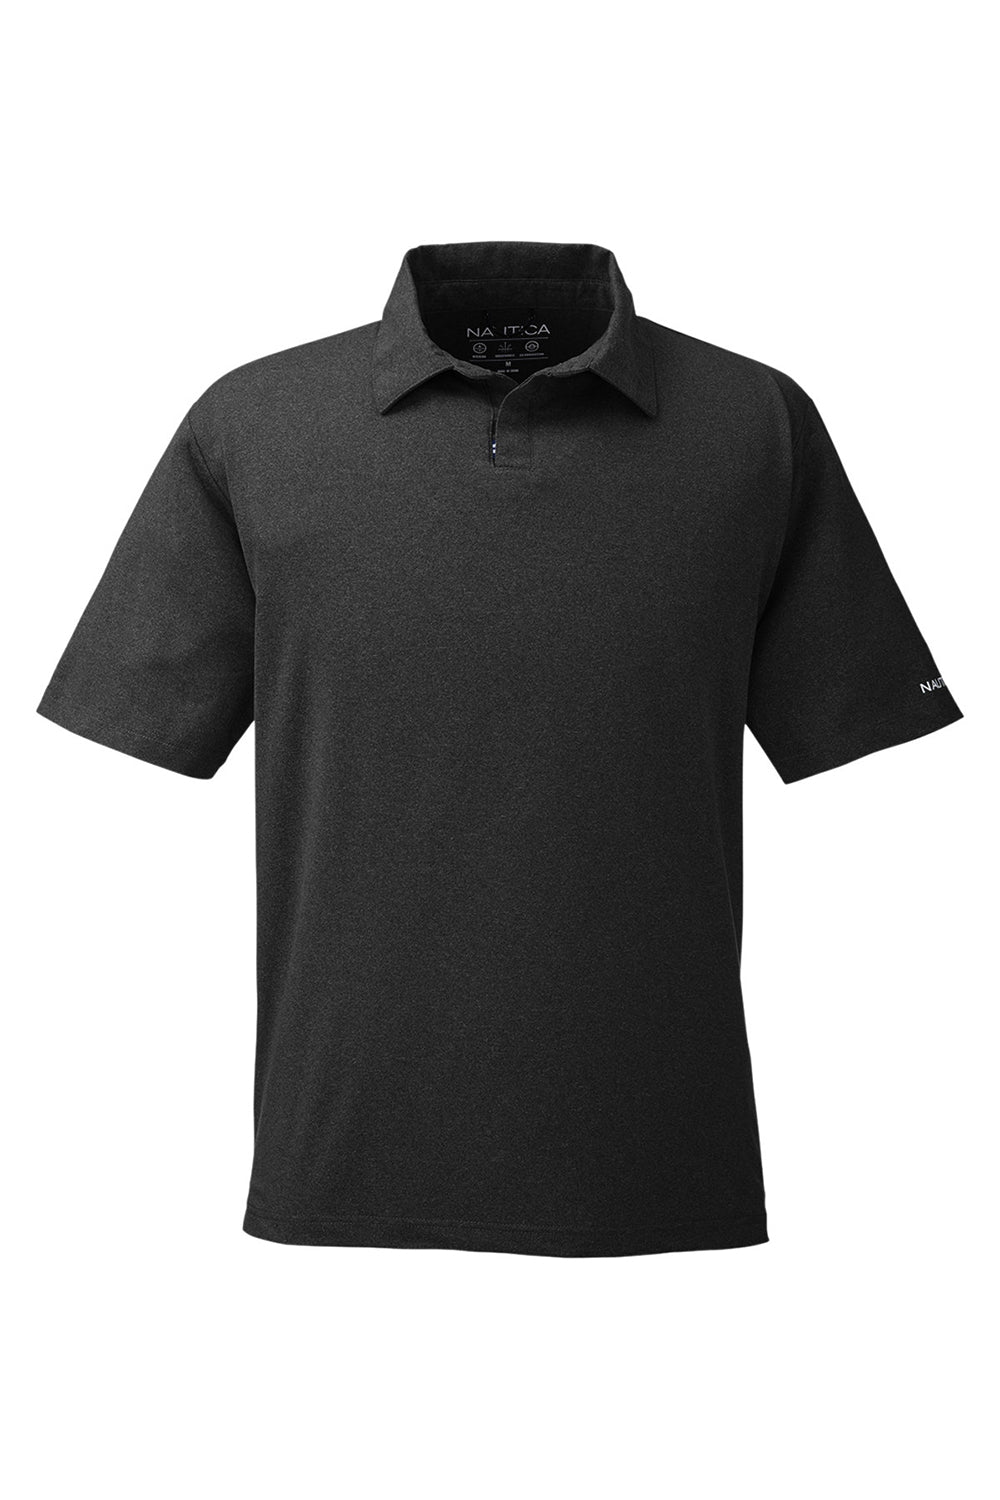 Nautica N17922 Mens Saltwater Short Sleeve Polo Shirt Onyx Black Flat Front